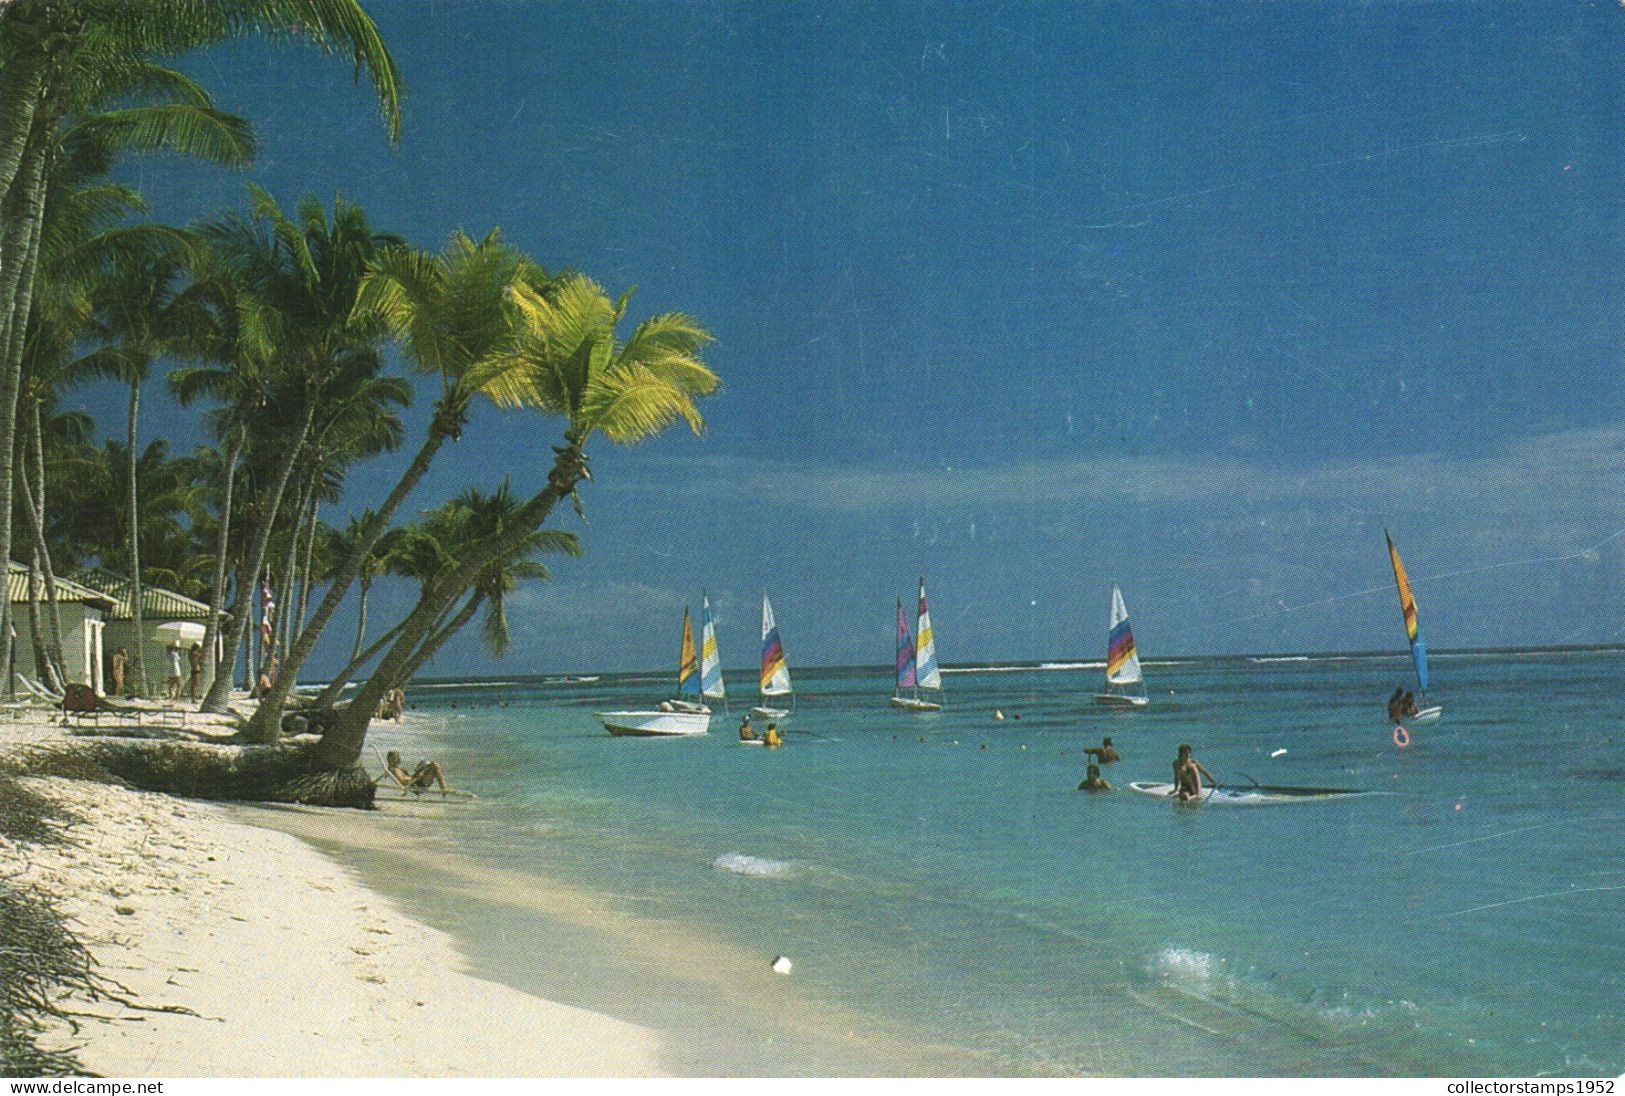 PUNTA CANA, BEACH, PLAGE, BOATS, SURF, DOMINICAN REPUBLIC - República Dominicana